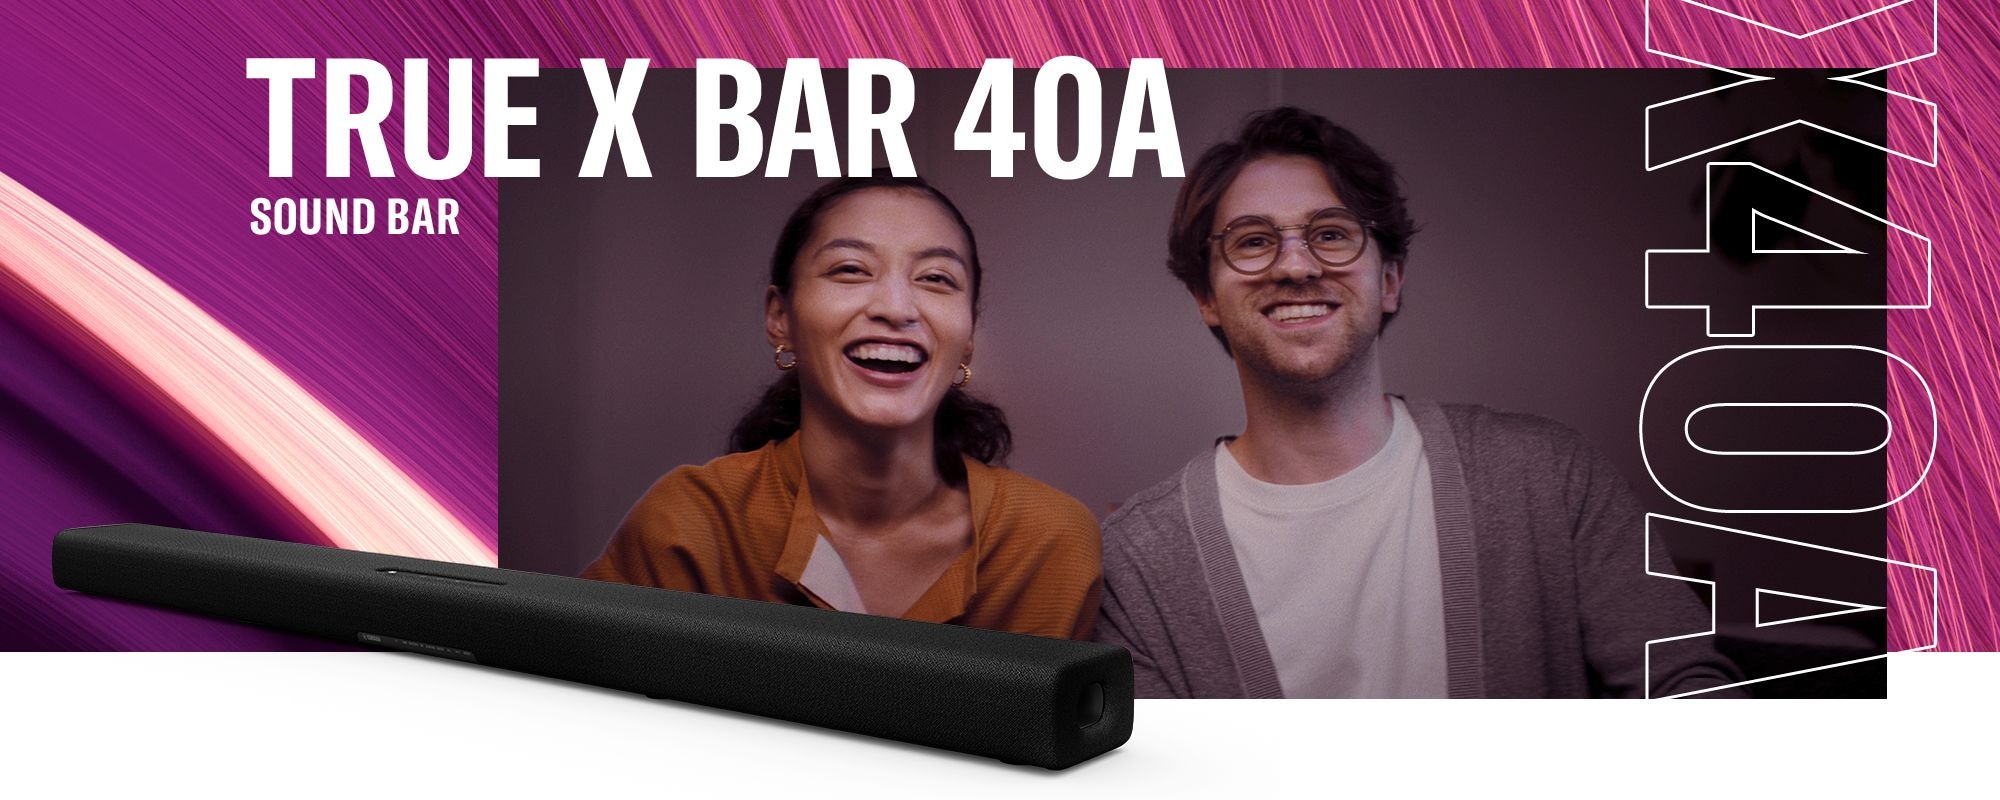 TRUE X BAR 40A Dolby Atmos Sound Bar - Yamaha USA